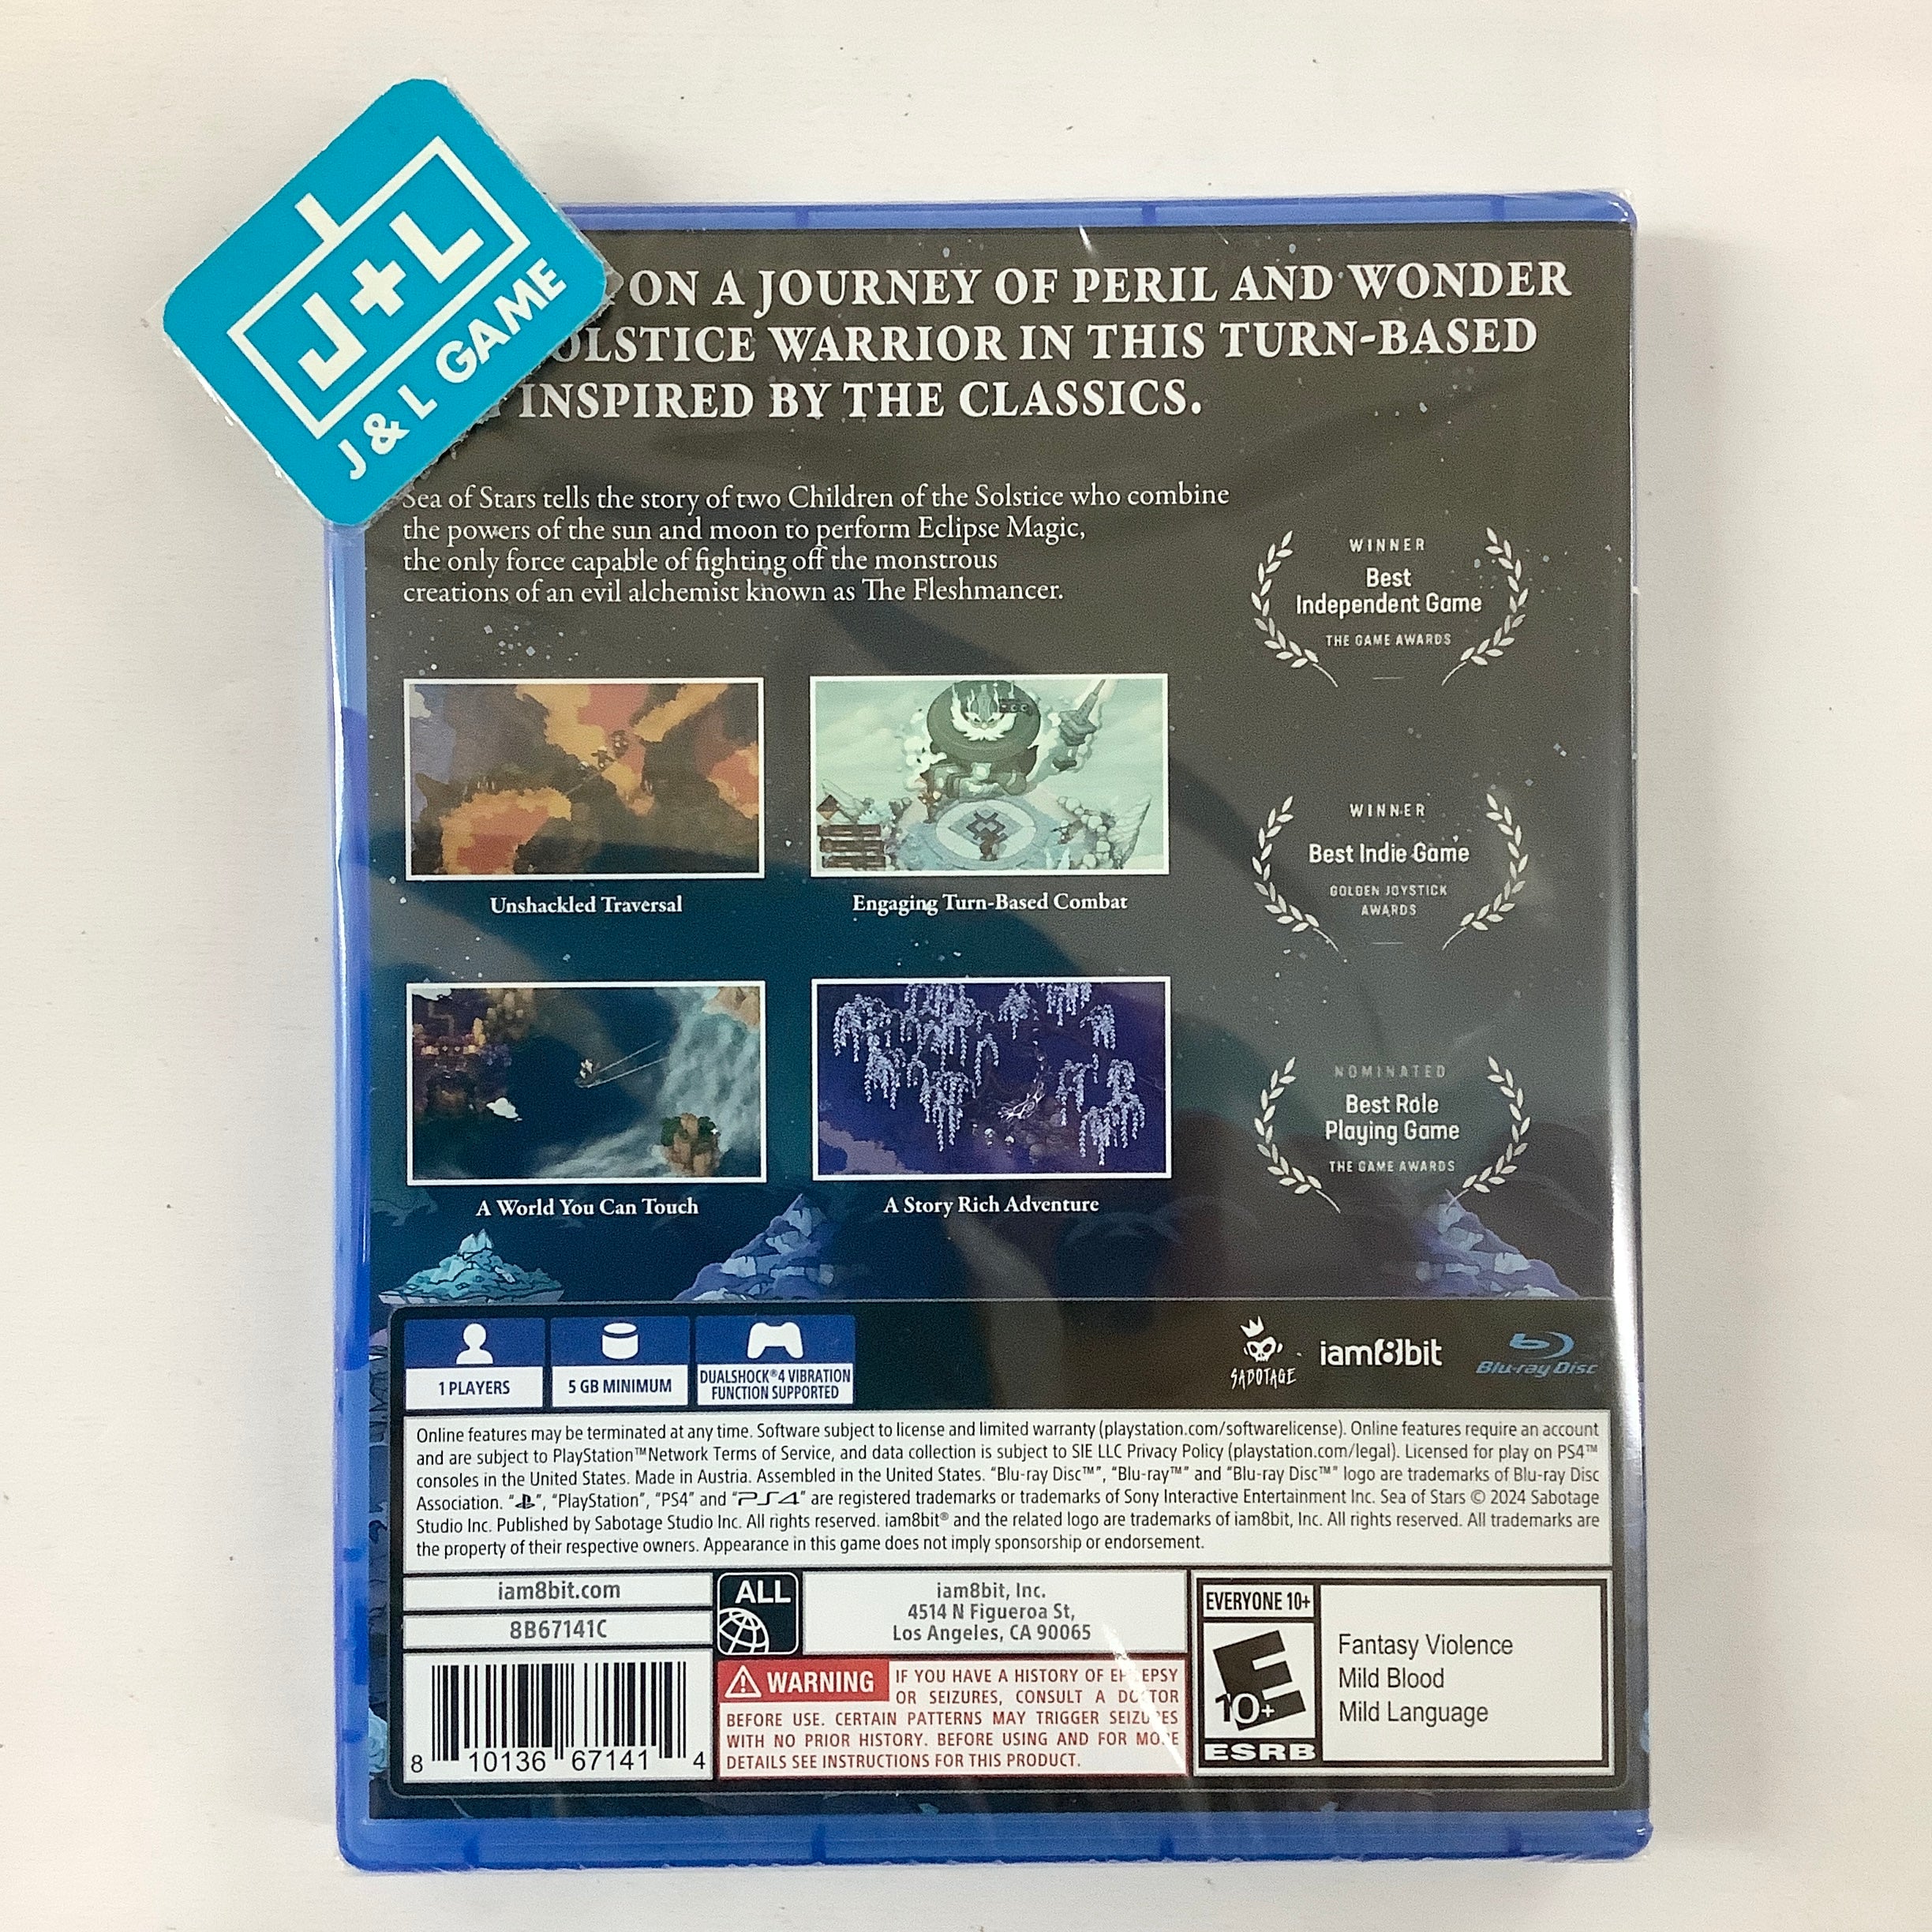 Sea of Stars - (PS4) PlayStation 4 Video Games iam8bit   